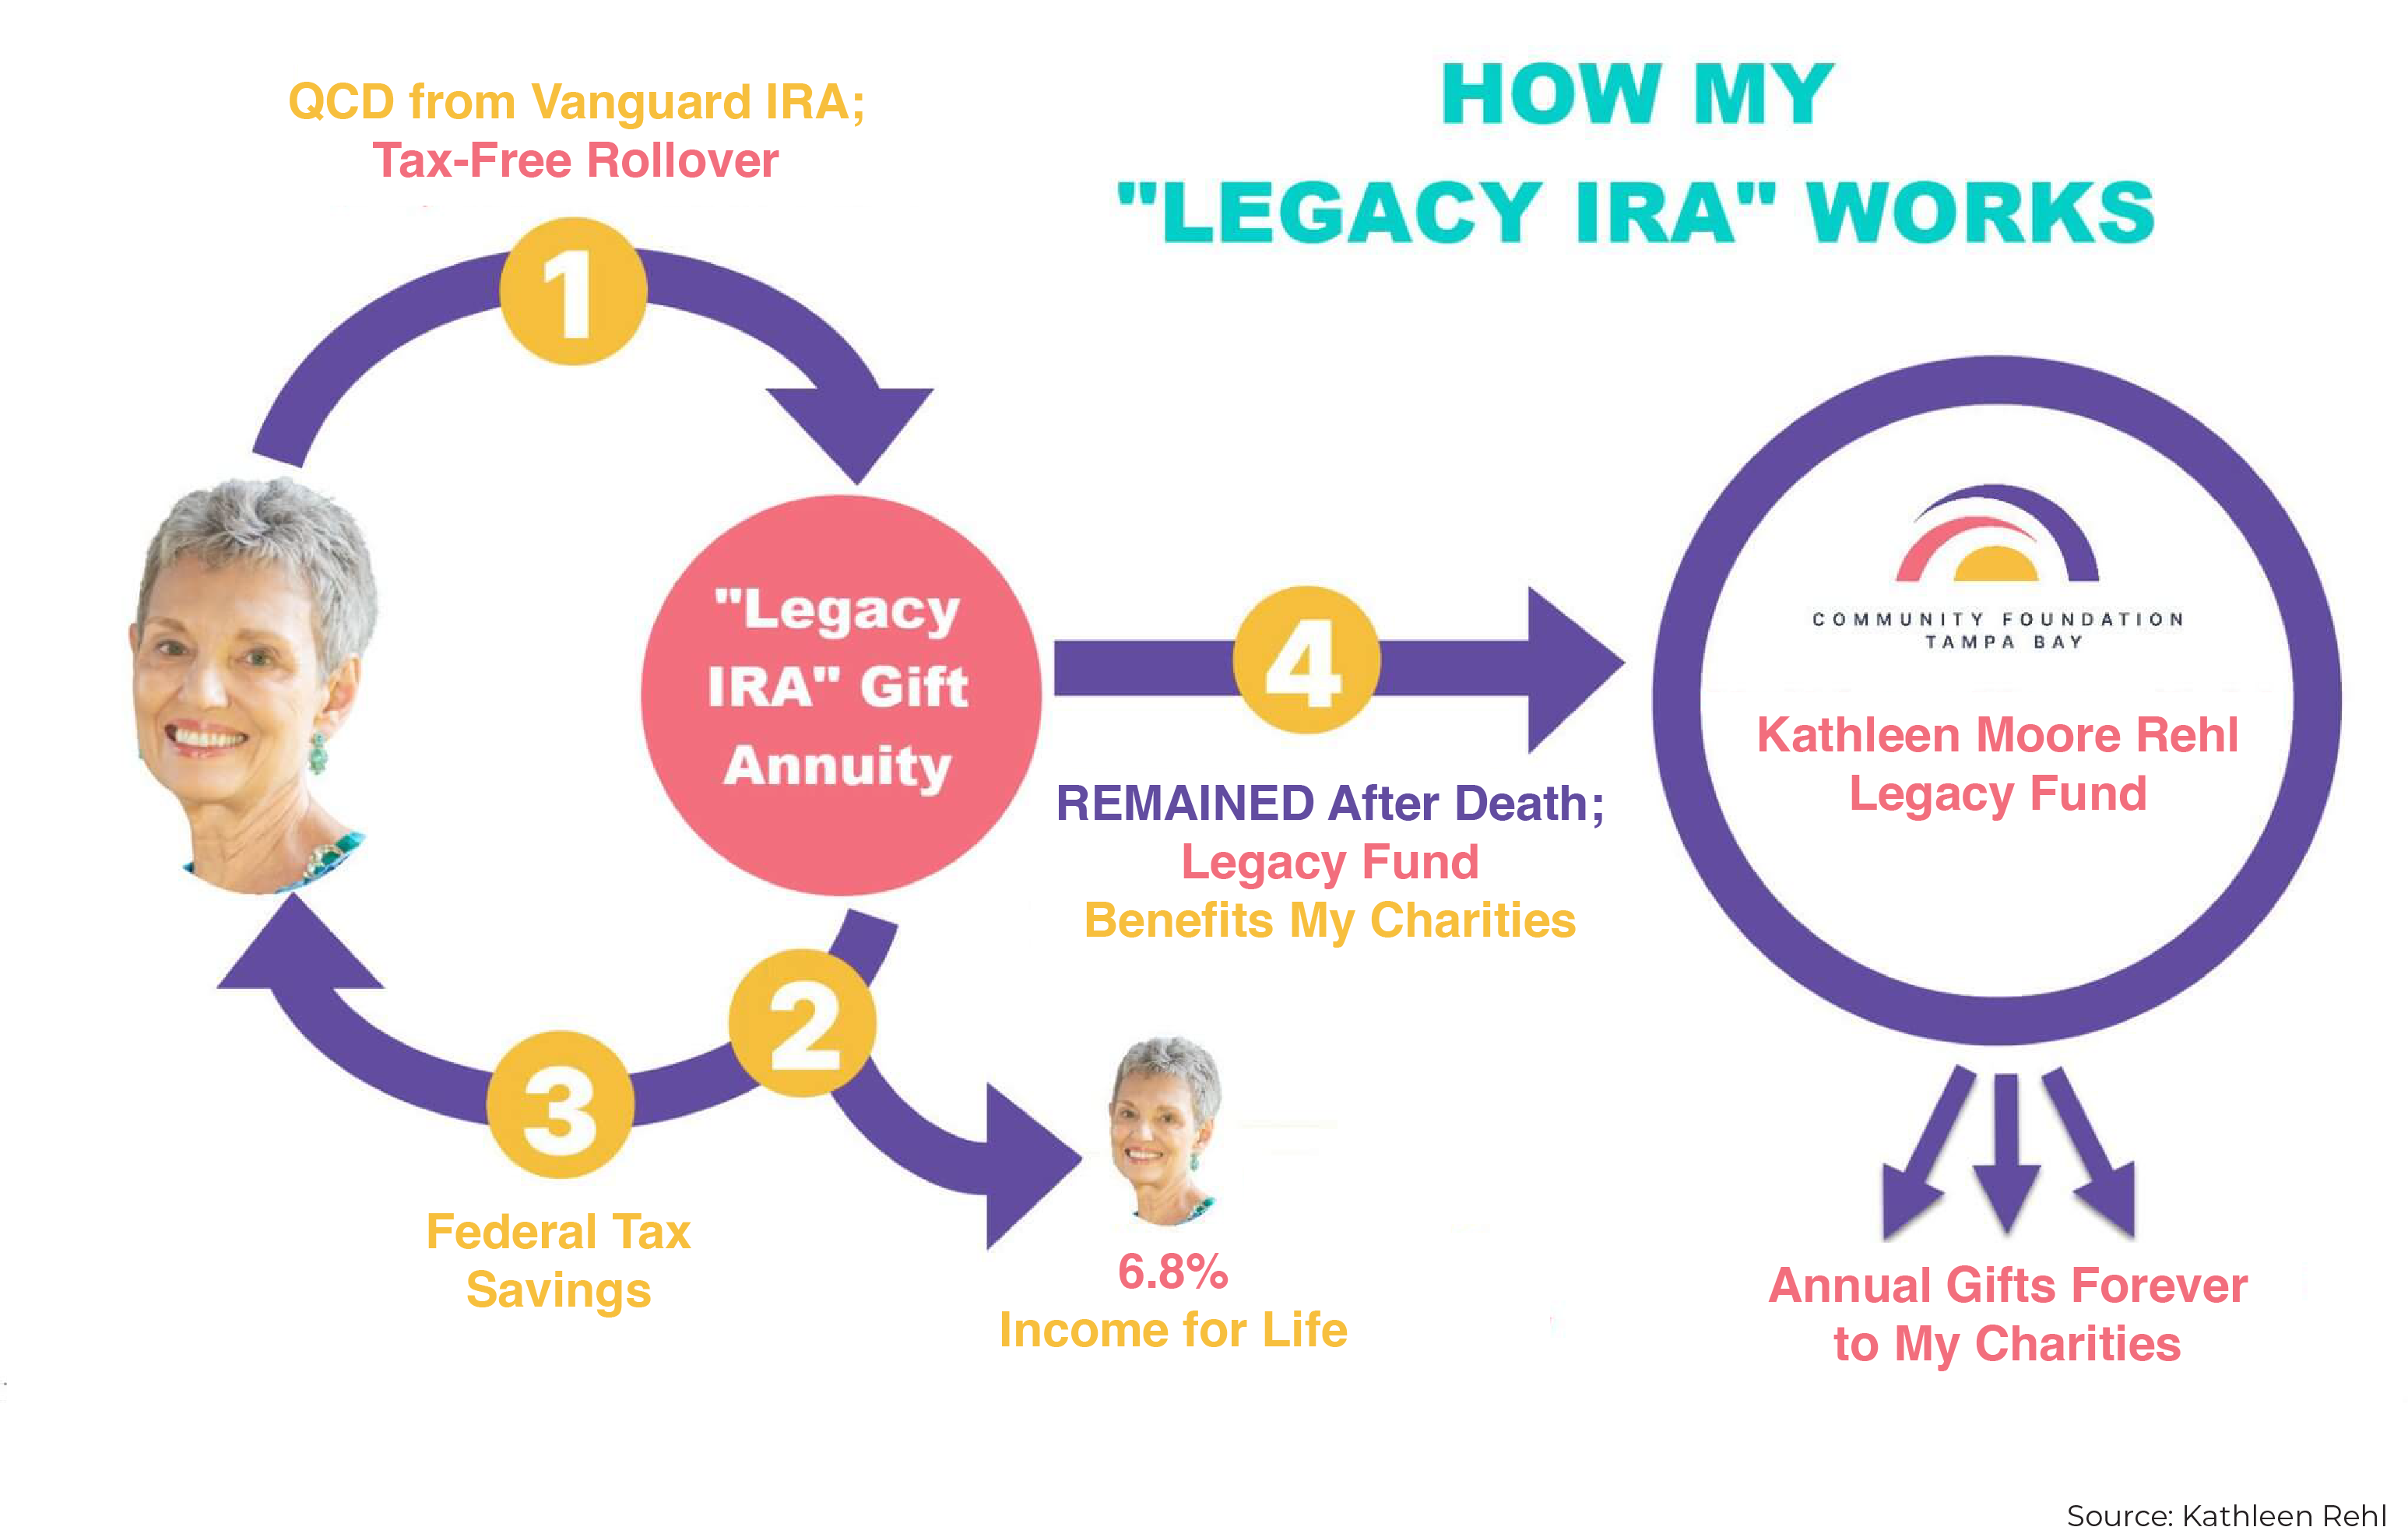 How My Legacy IRA Works